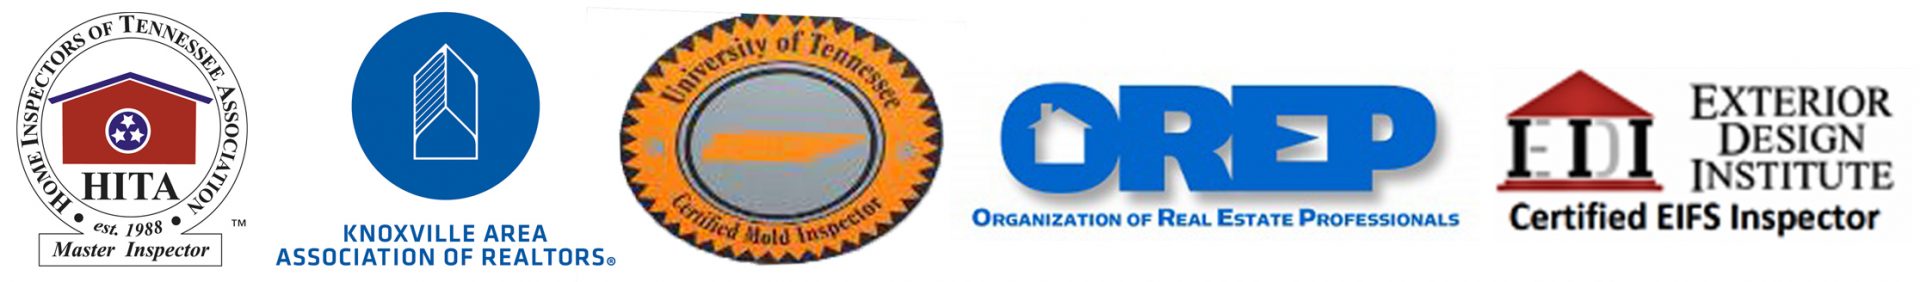 Home Inspector Association Logos